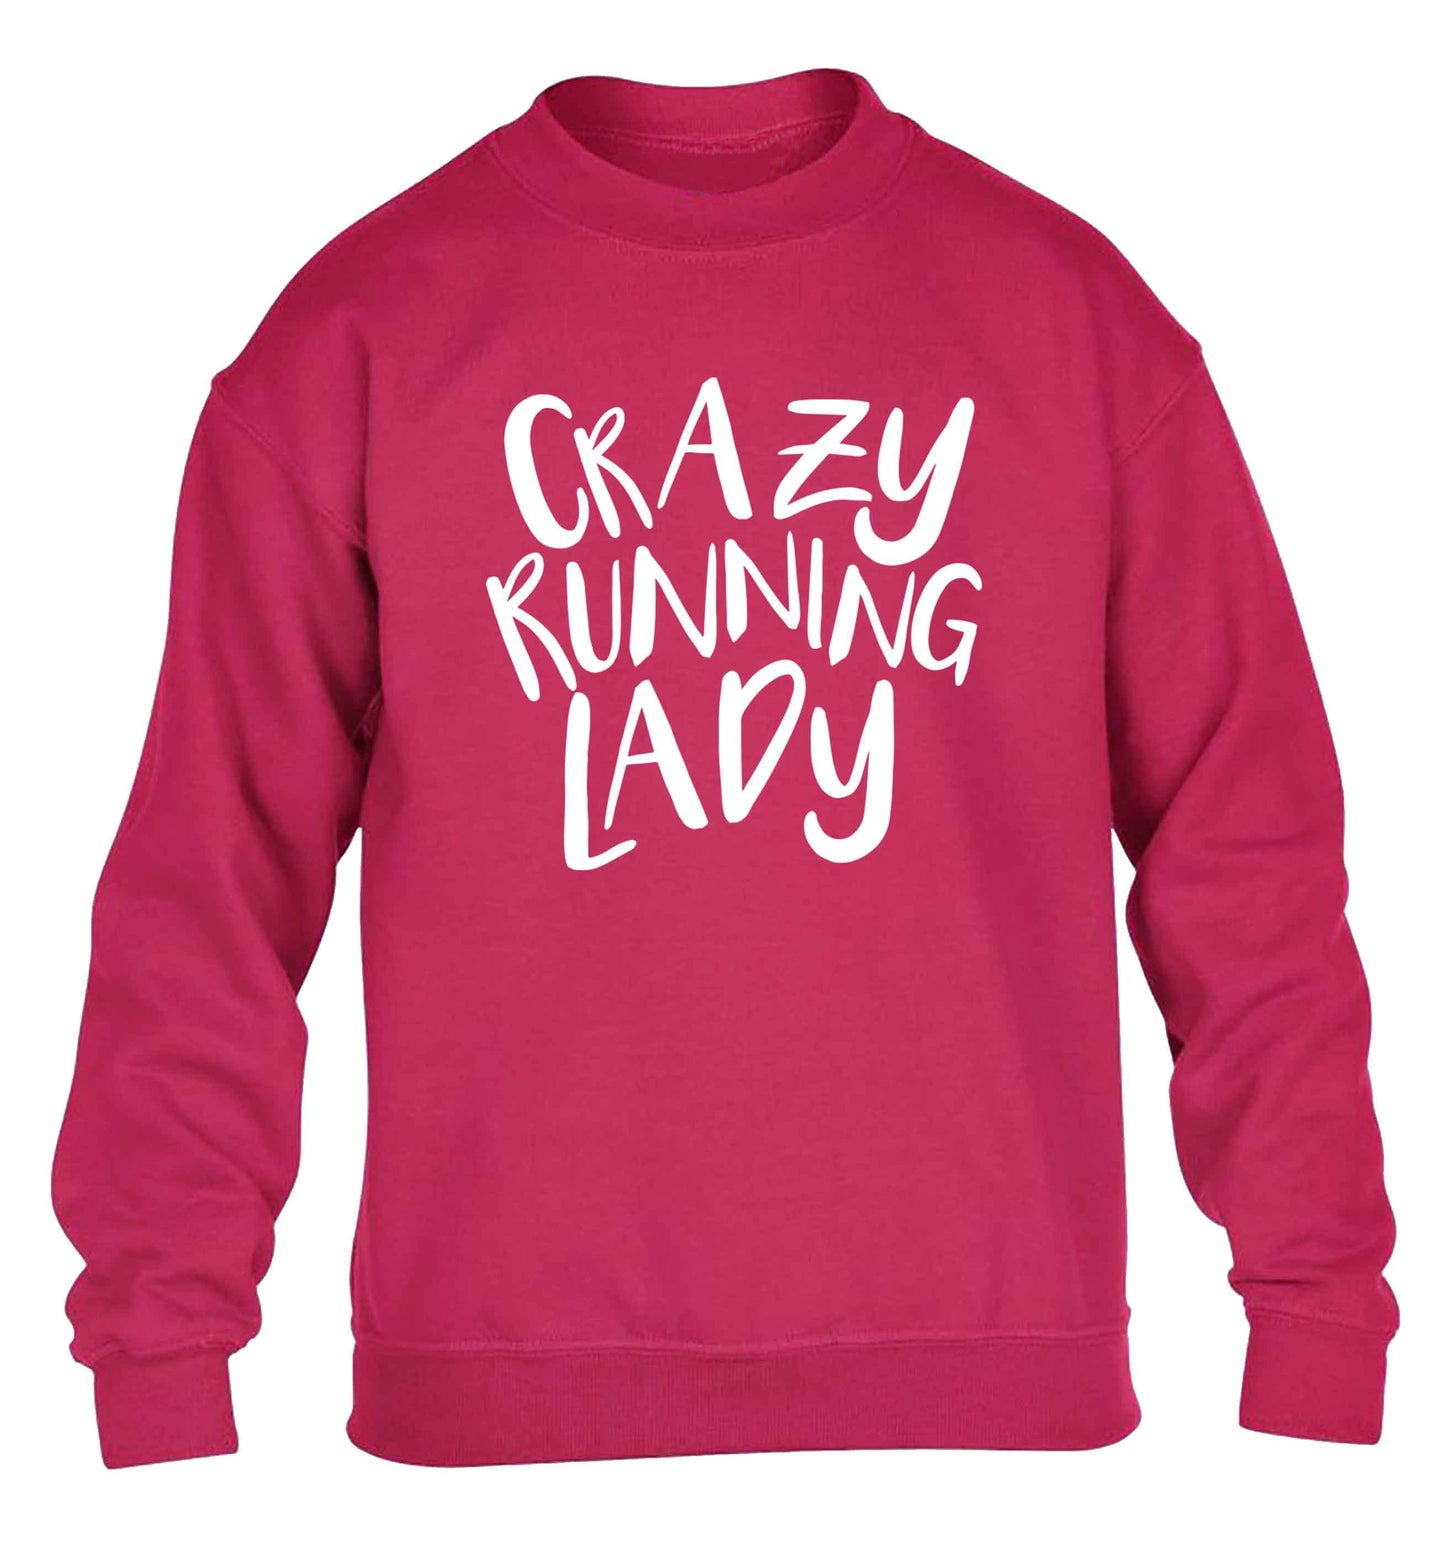 Crazy running lady children's pink sweater 12-13 Years